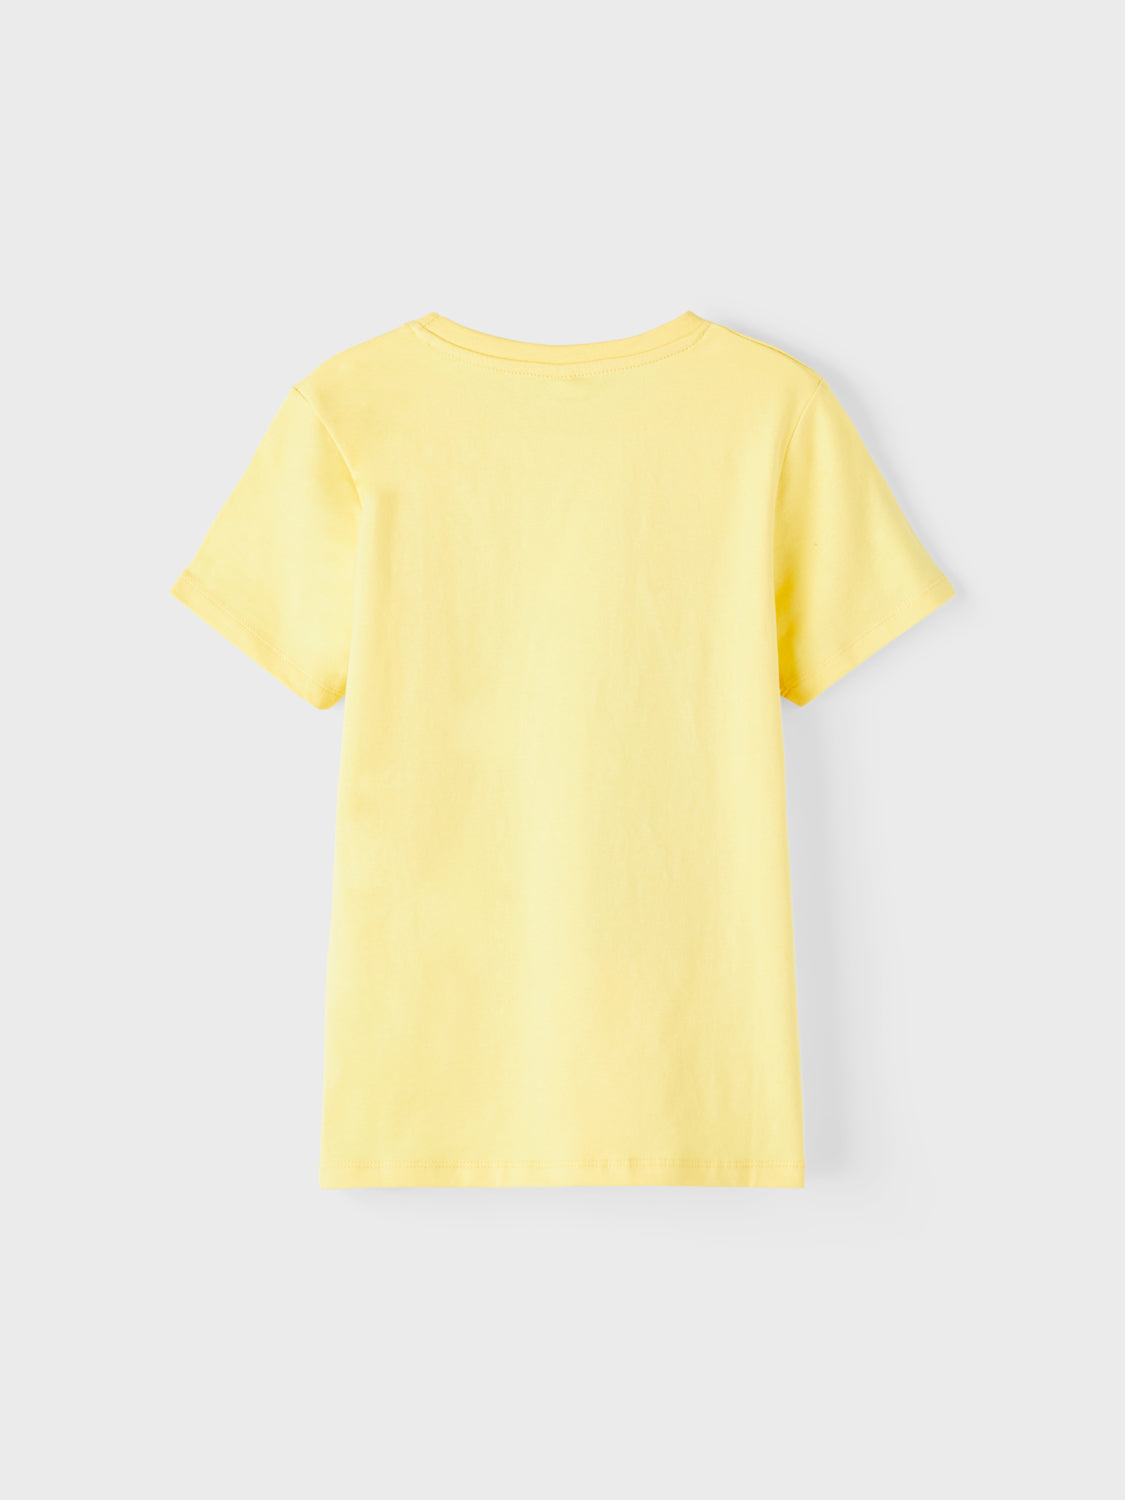 NKMJAGGER T-Shirts & Tops - Sundress